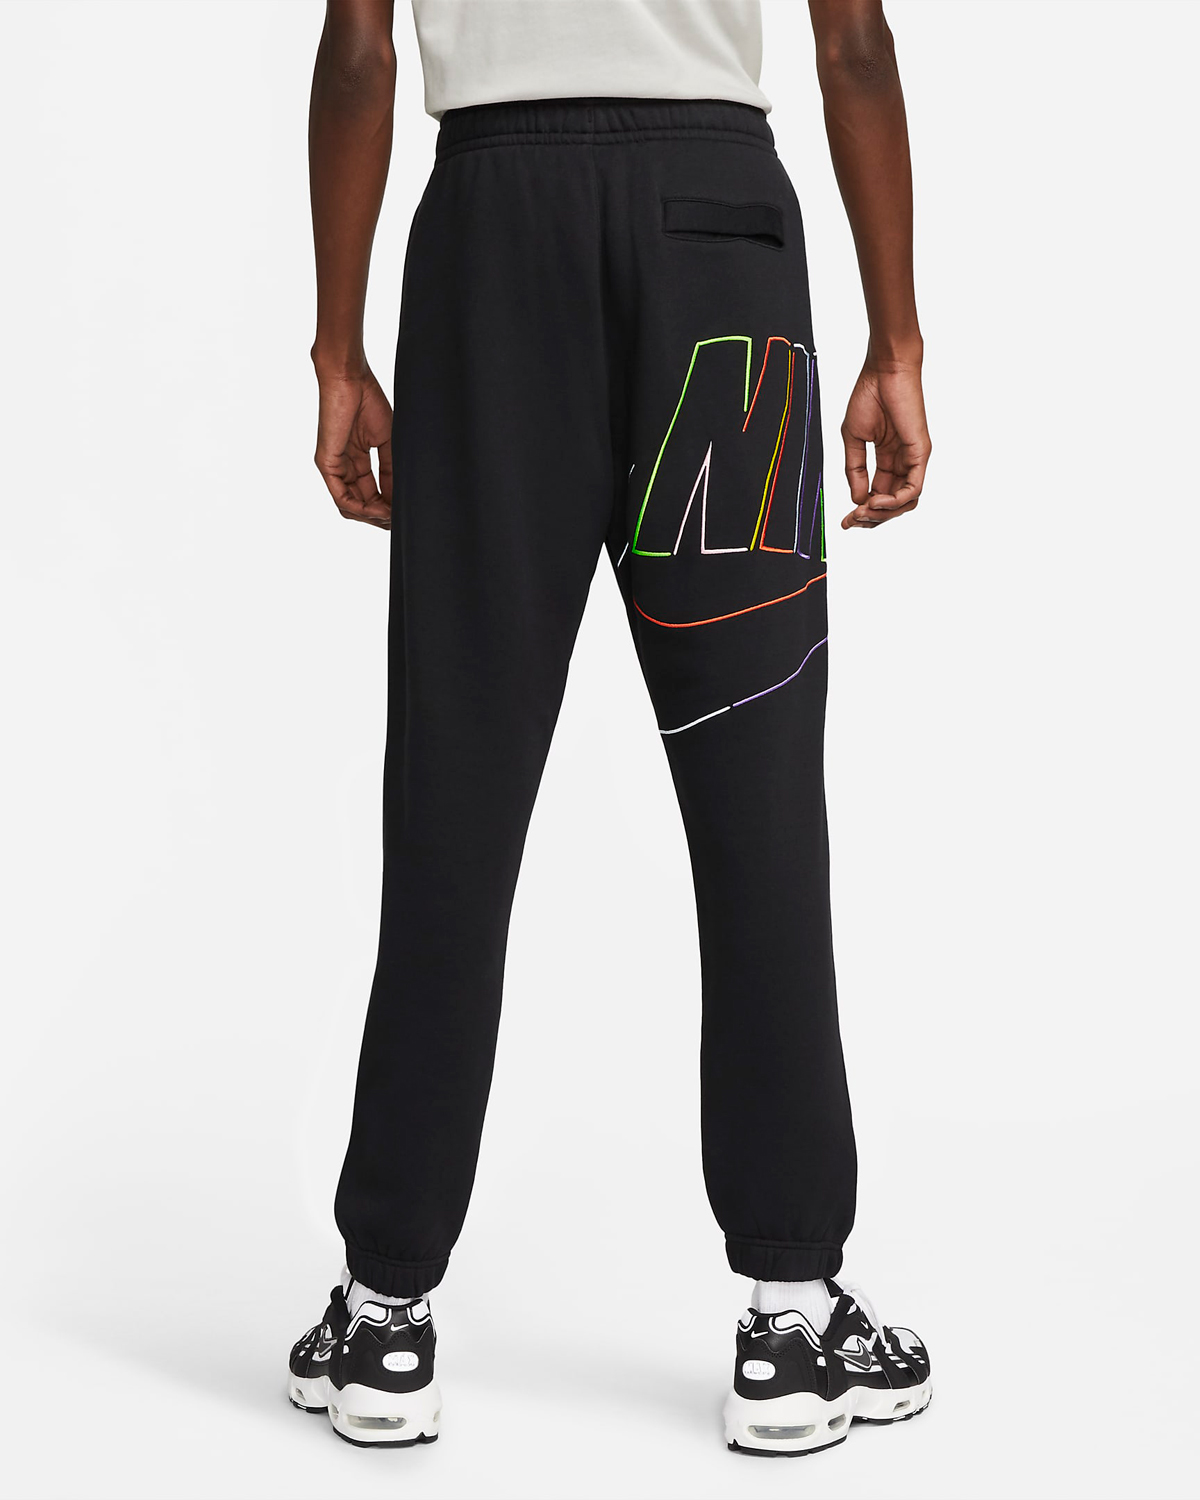 Nike-Club-Fleece-Pants-Black-Multi-Color-2